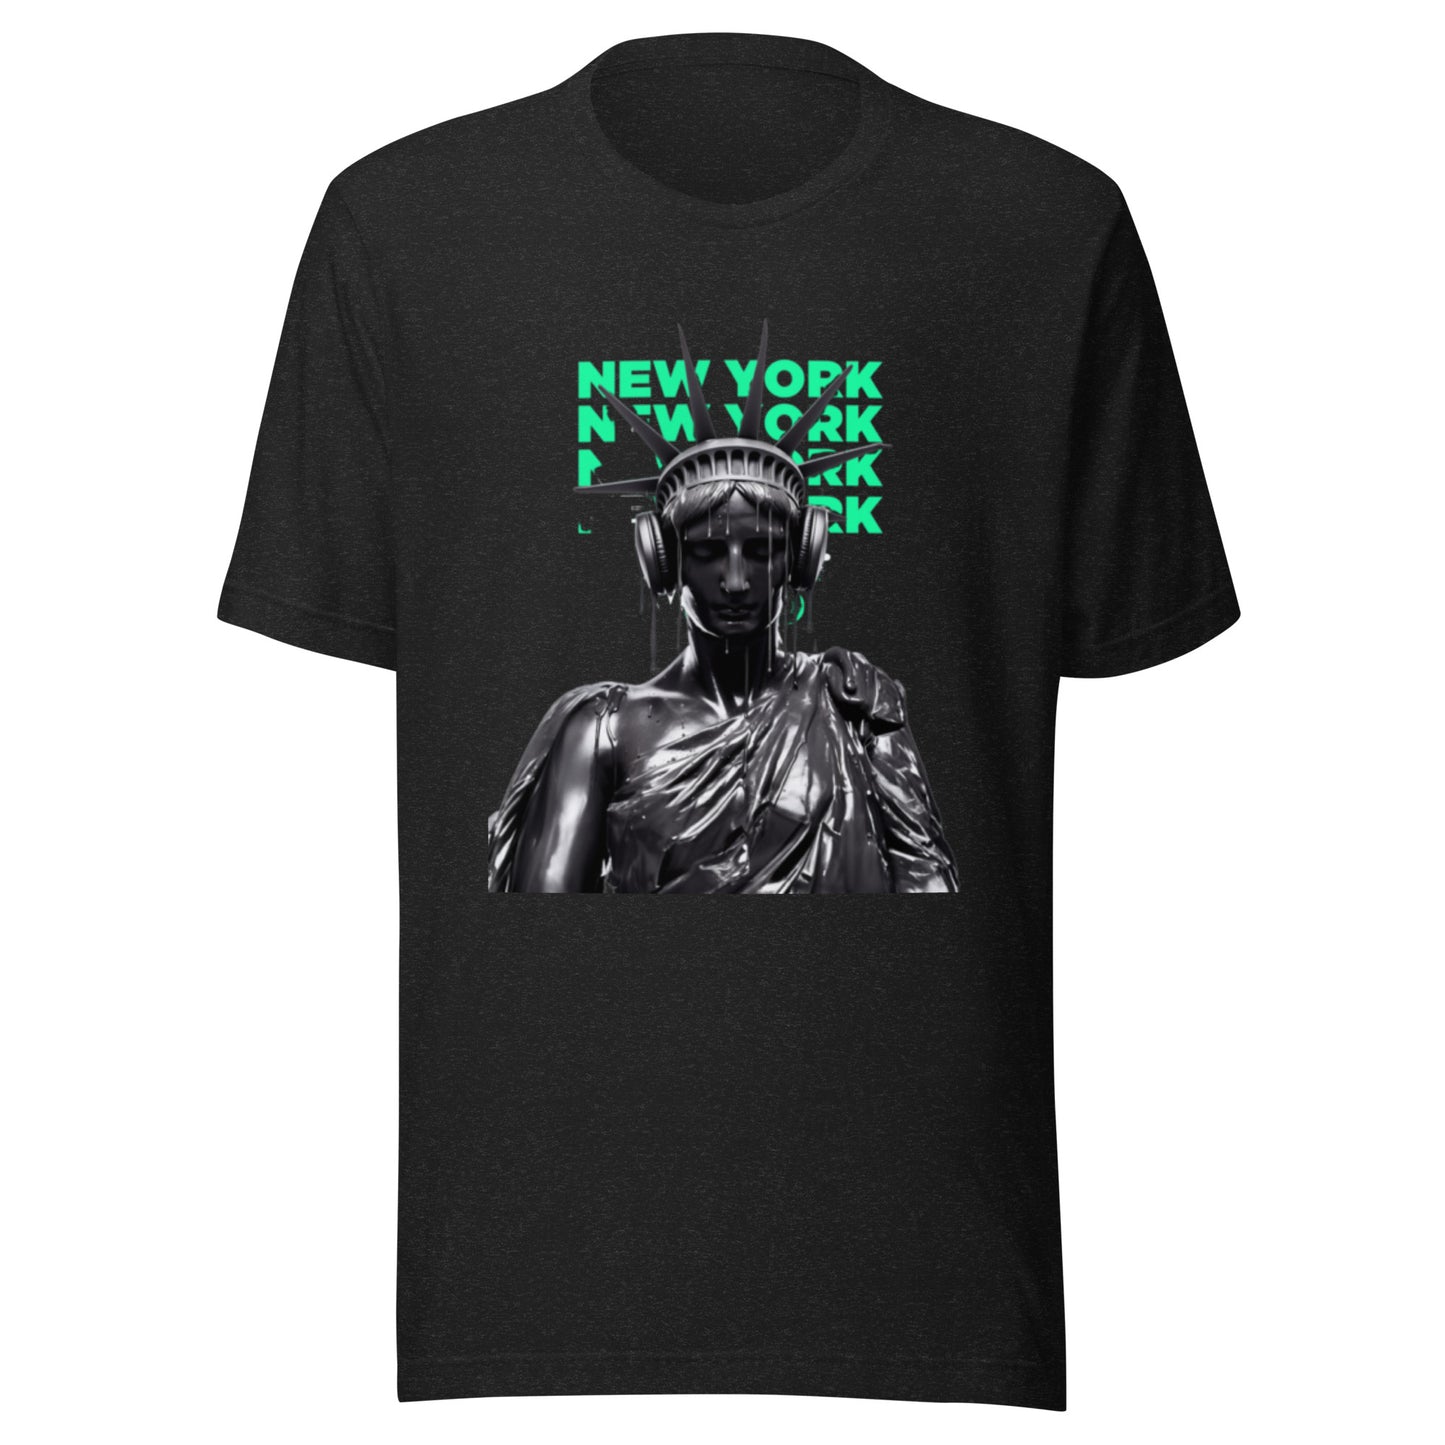 New York (ez1style) - Unisex t-shirt